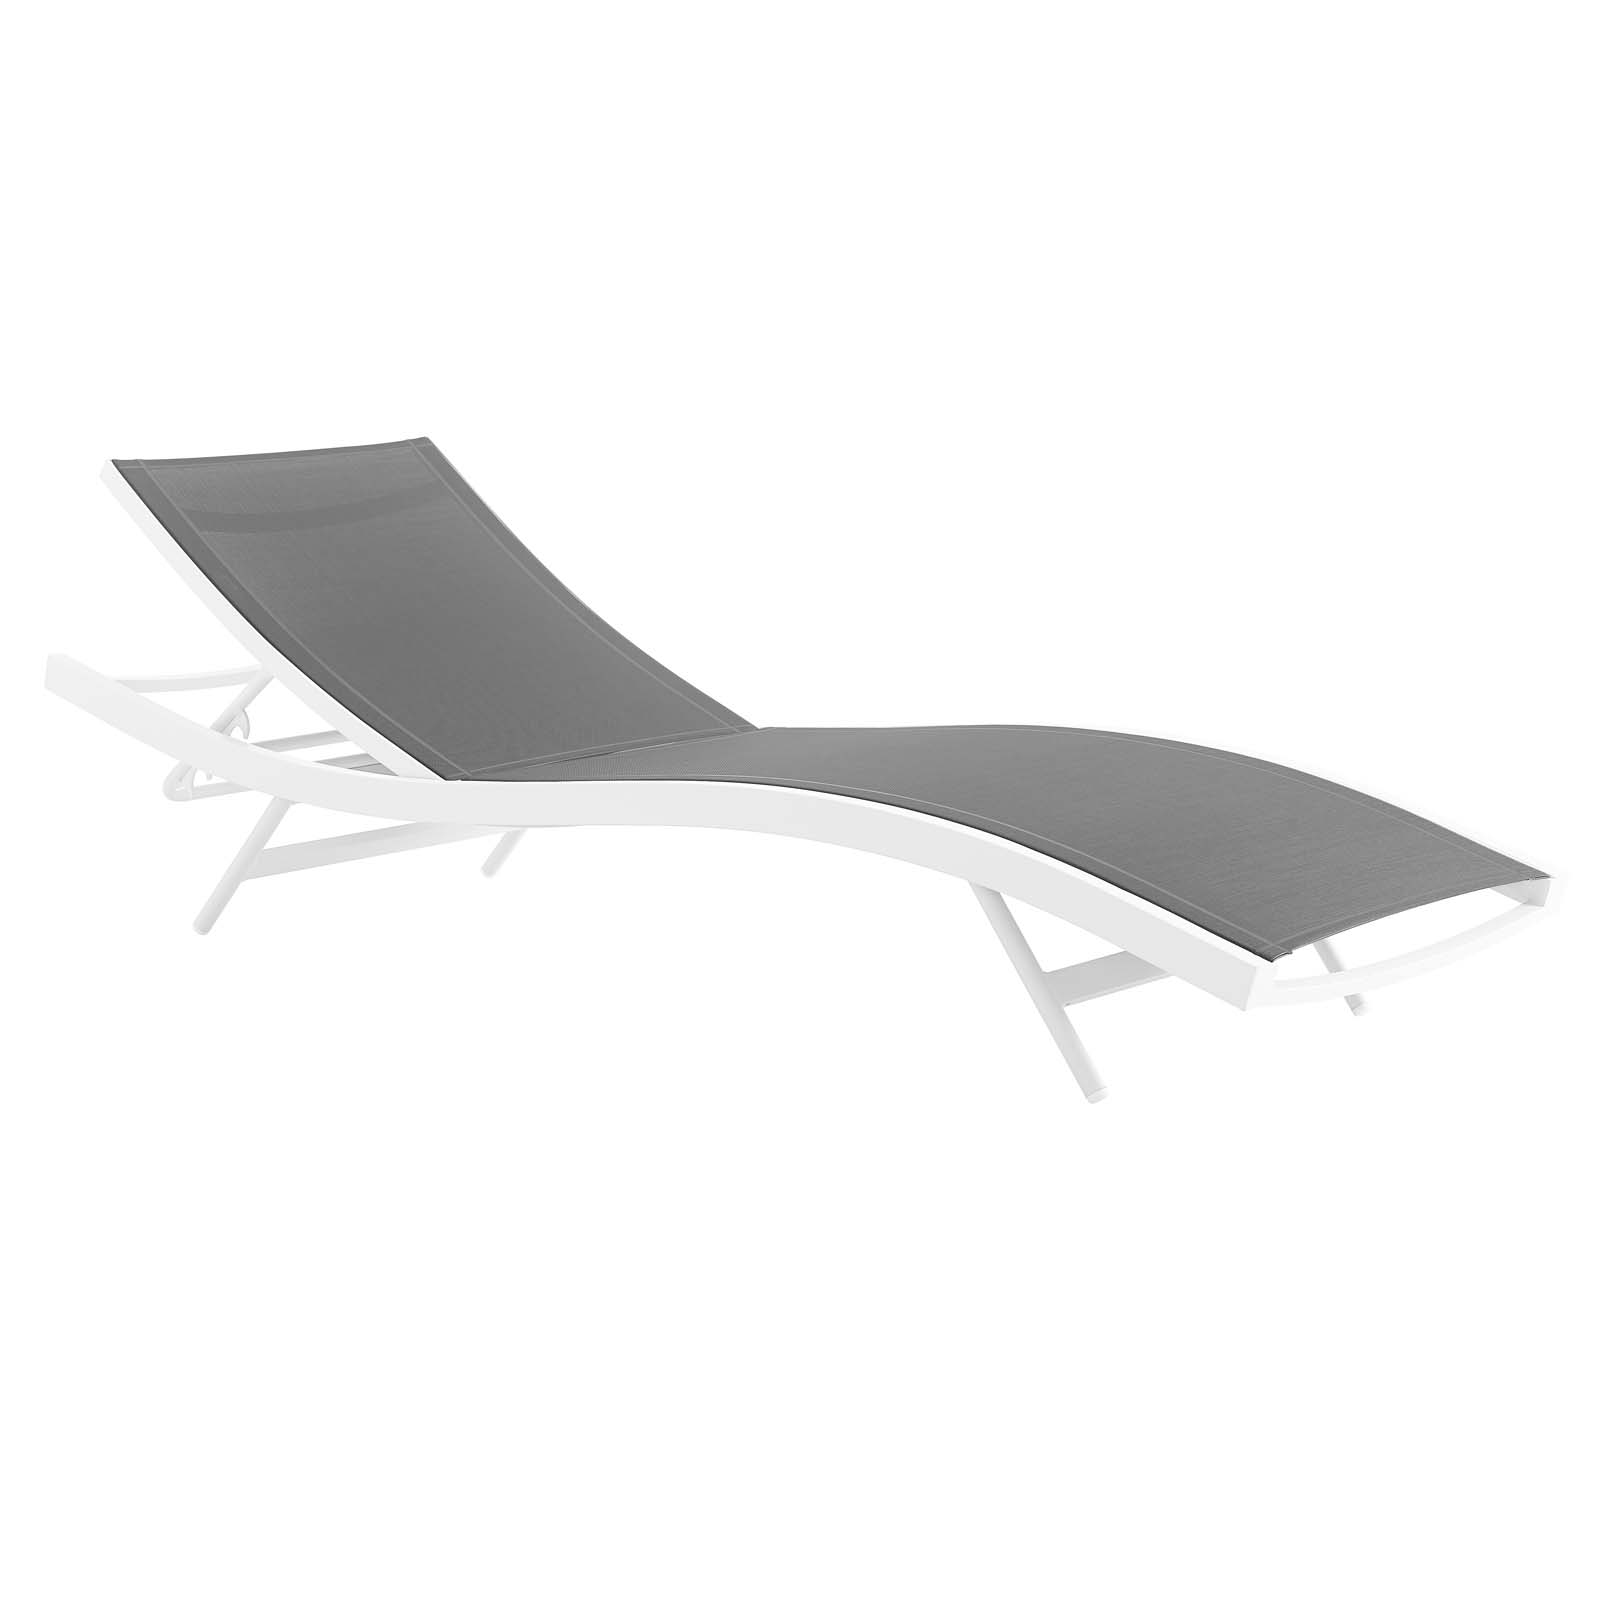 Modern Contemporary Urban Design Outdoor Patio Balcony Garden Furniture Lounge Chair Chaise, Fabric Aluminium, White Grey Gray - image 4 of 7